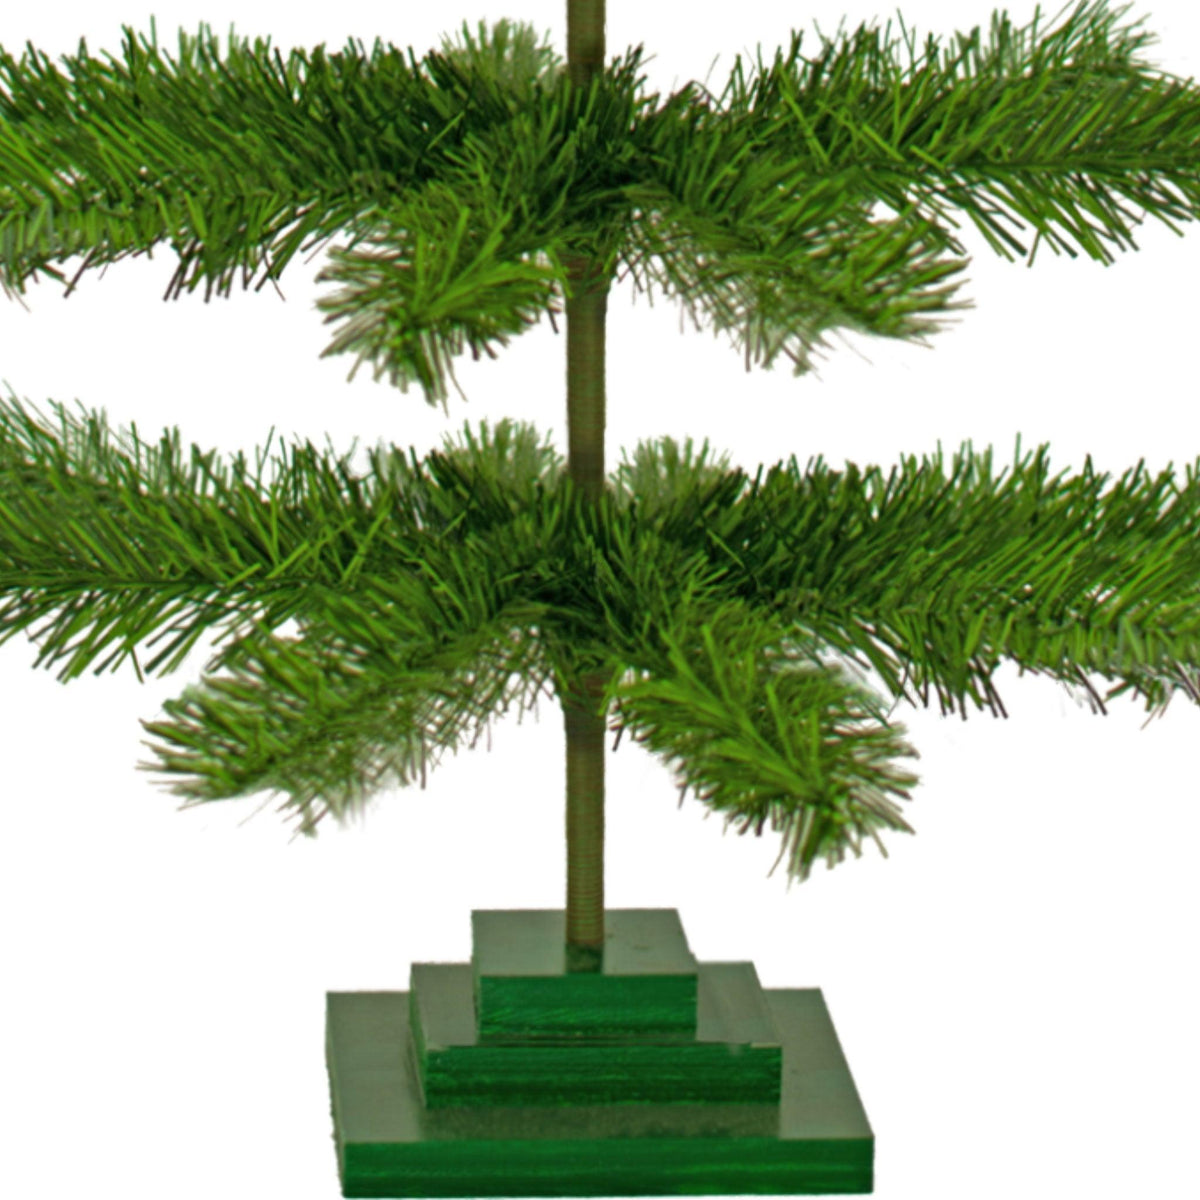 Bottom of the 4ft tree.  Lee Display's 48in Tall Alpine Green Tinsel Christmas Tree on sale at leedisplay.com